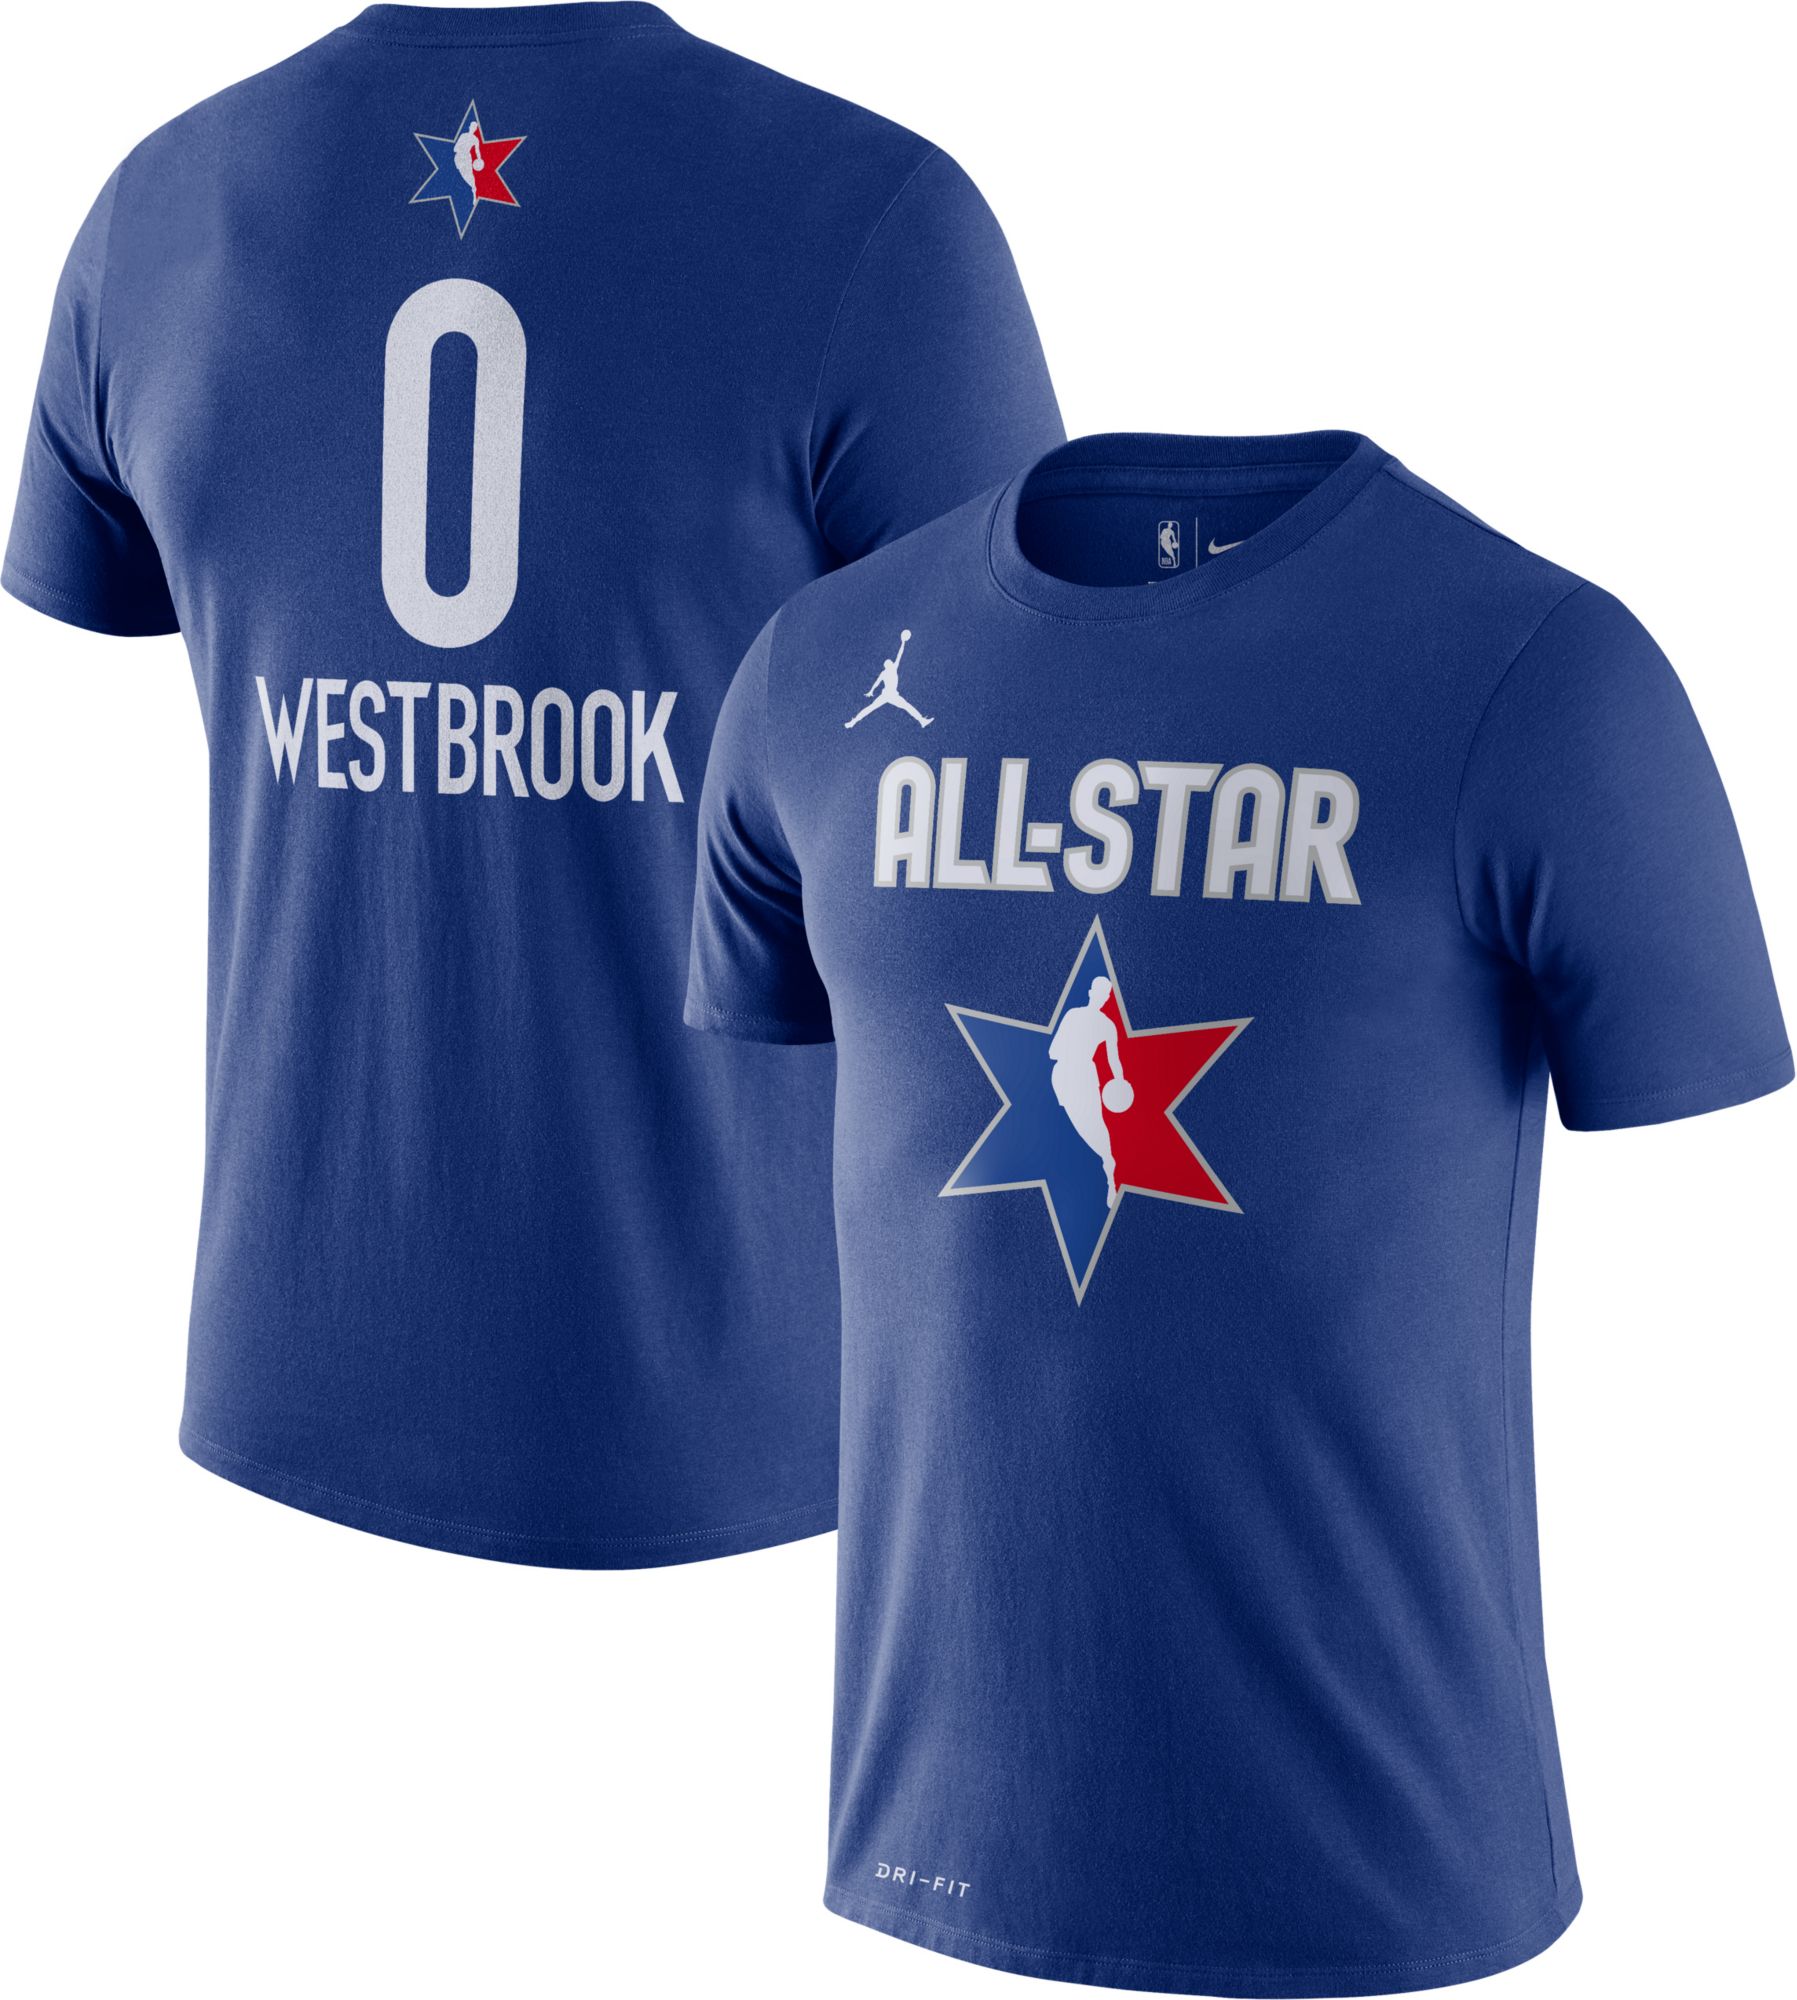 westbrook t shirt jersey